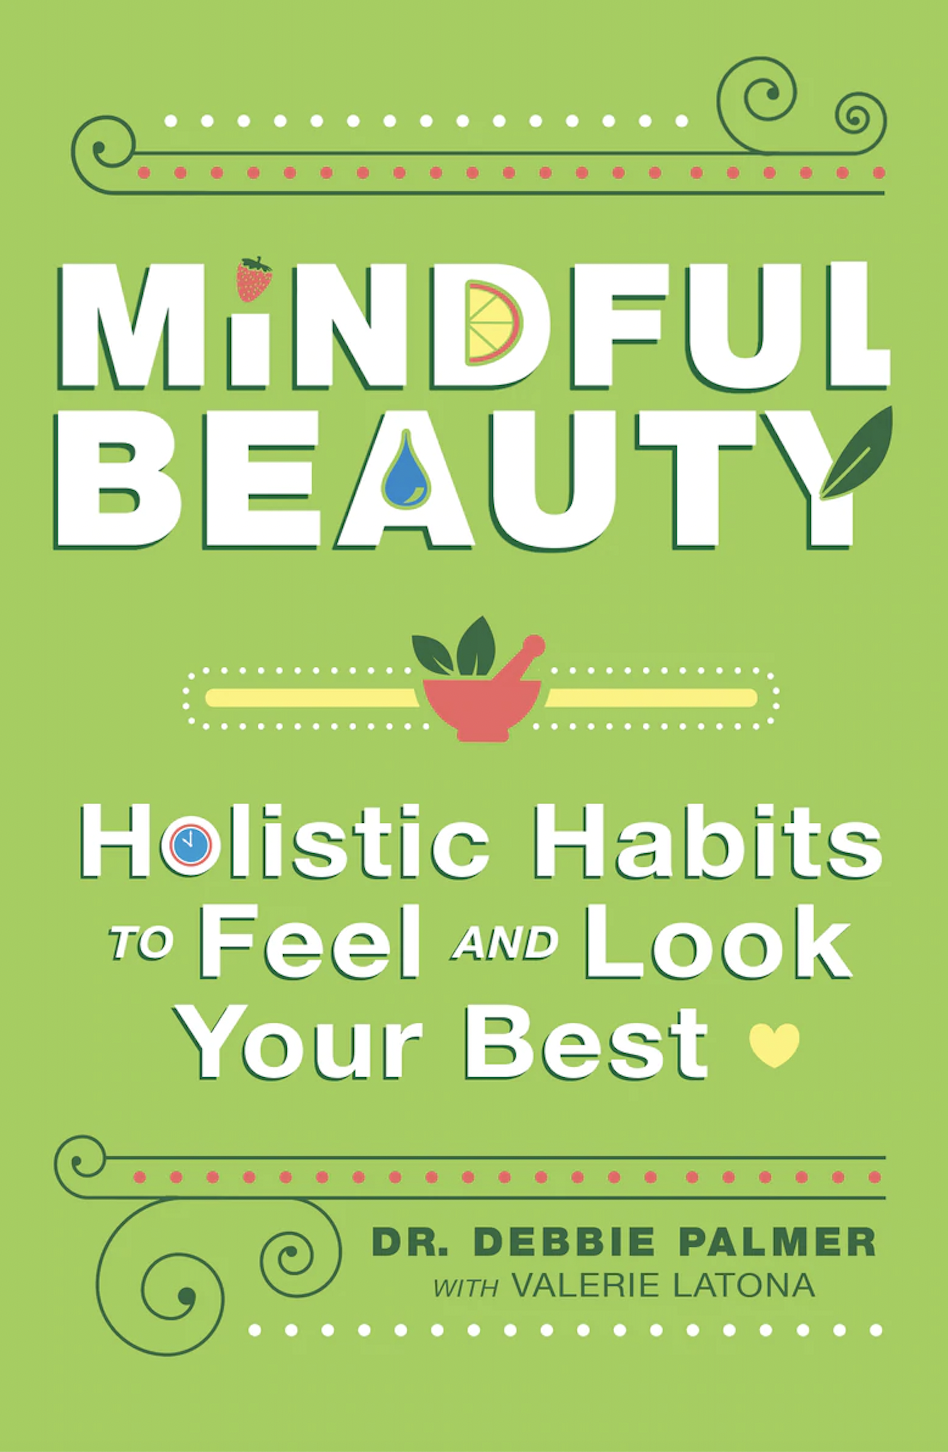 Mindful Beauty by Dr. Debbie Palmer